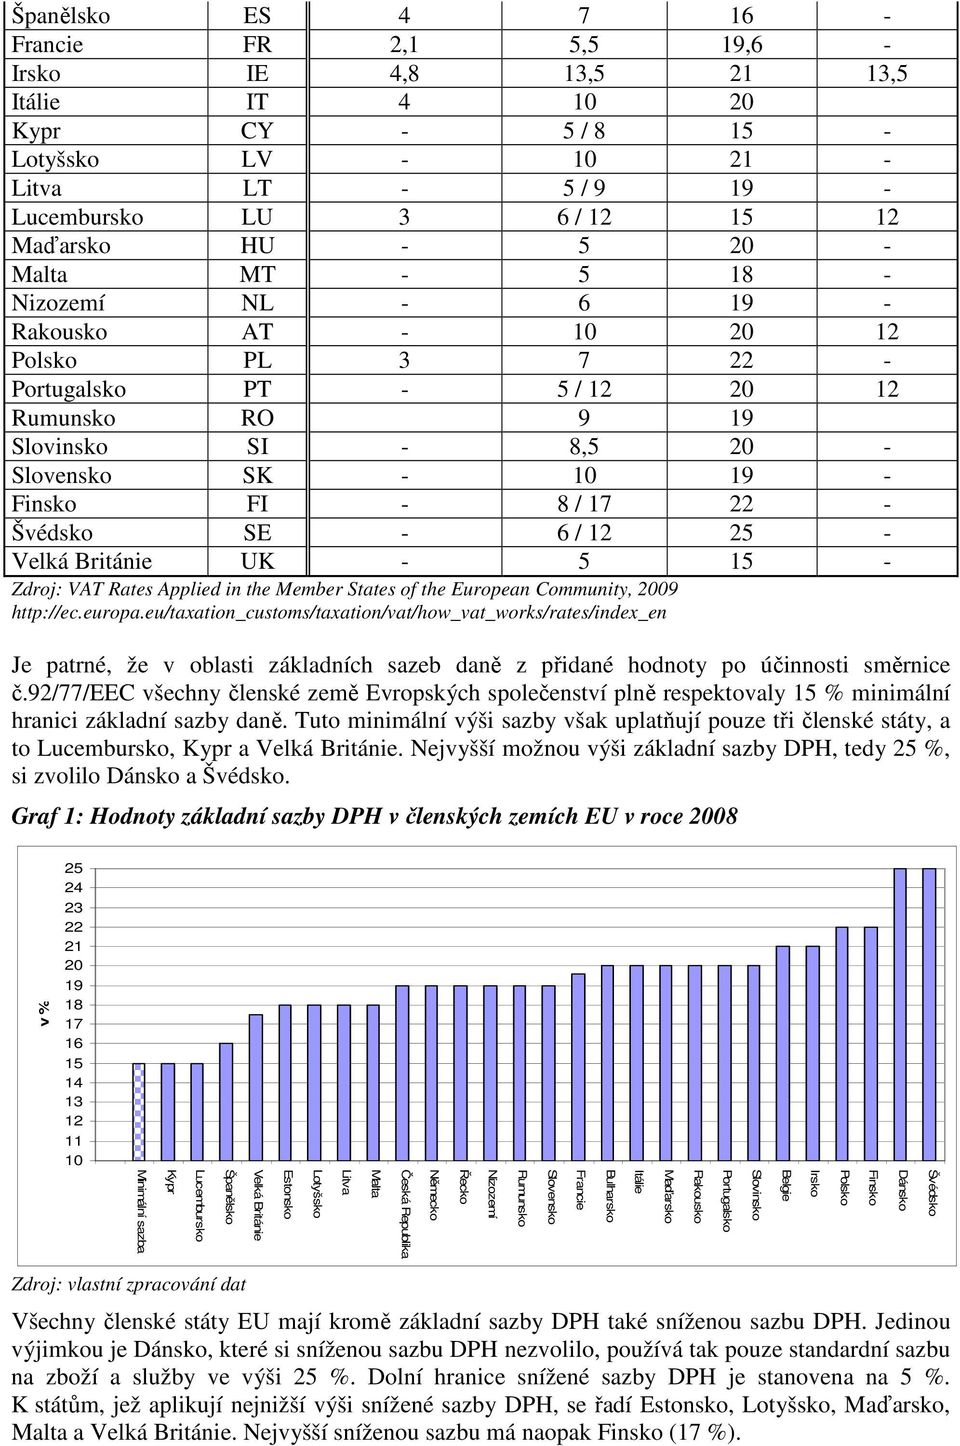 17 22 - Švédsko SE - 6 / 12 25 - Velká Británie UK - 5 15 - Zdroj: VAT Rates Applied in the Member States of the European Community, 2009 http://ec.europa.